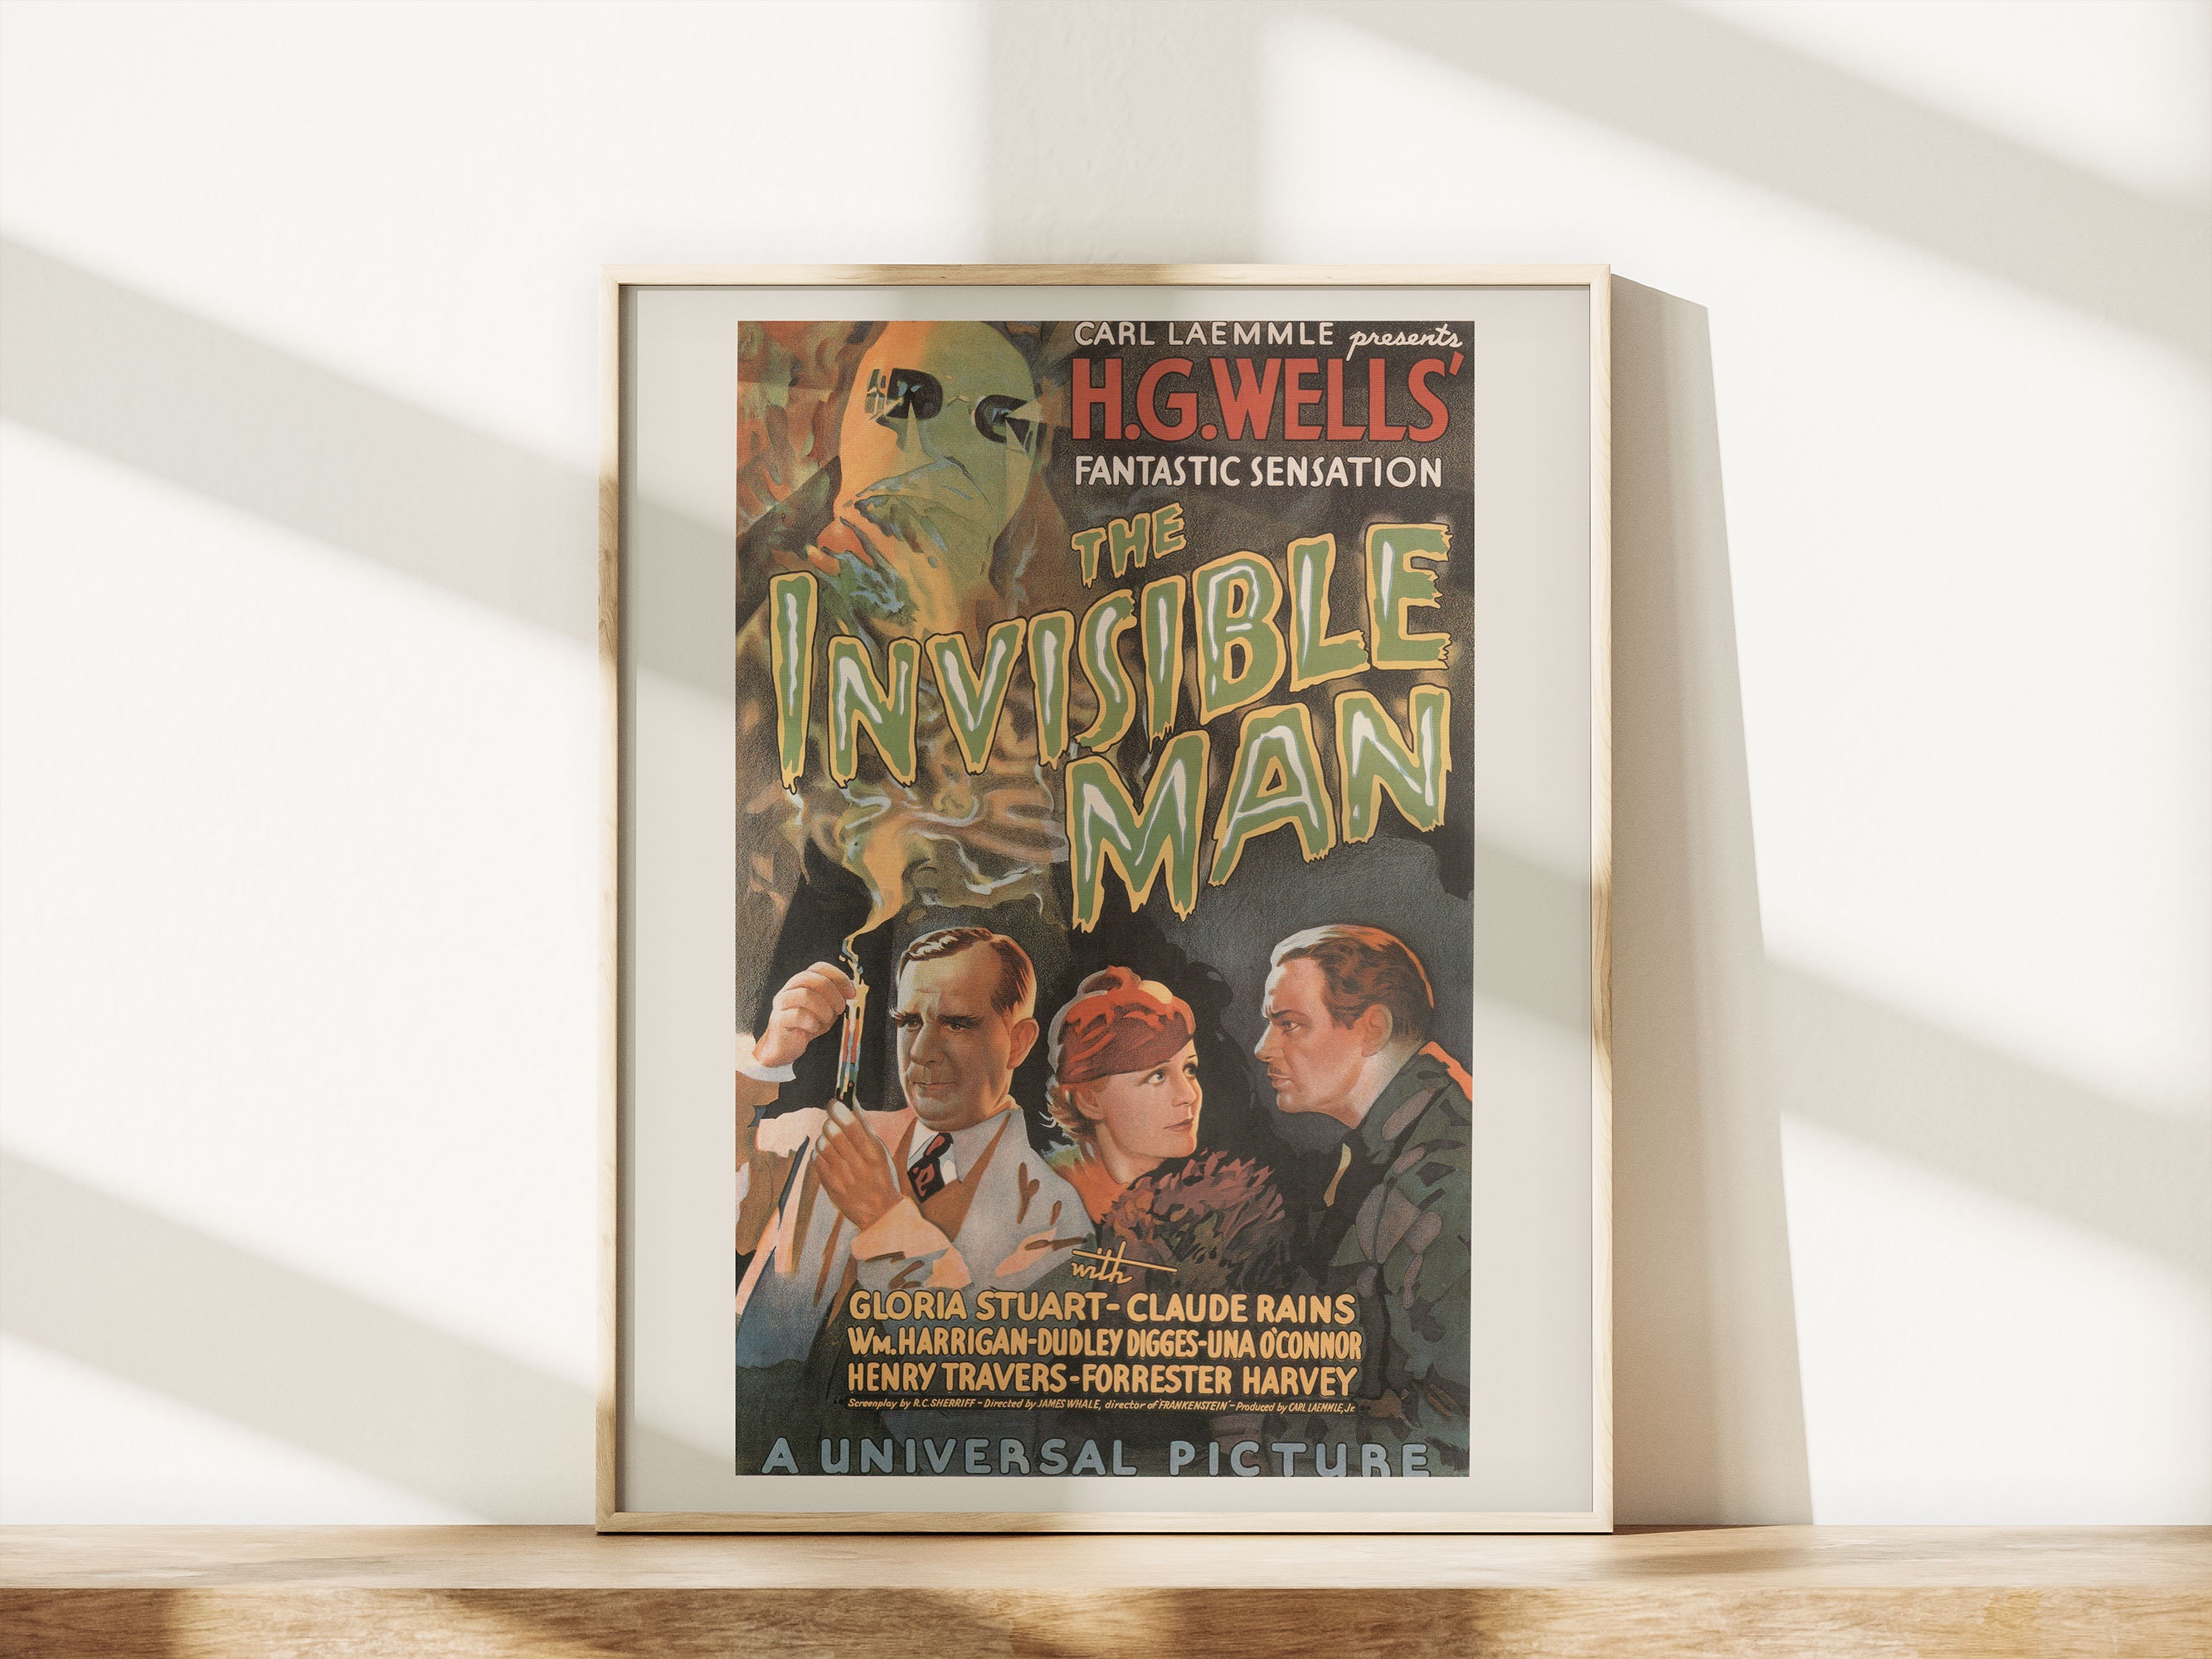 RETRO MOVIE POSTER, The Invisible Man Cult Movie Poster Classic Movie Poster